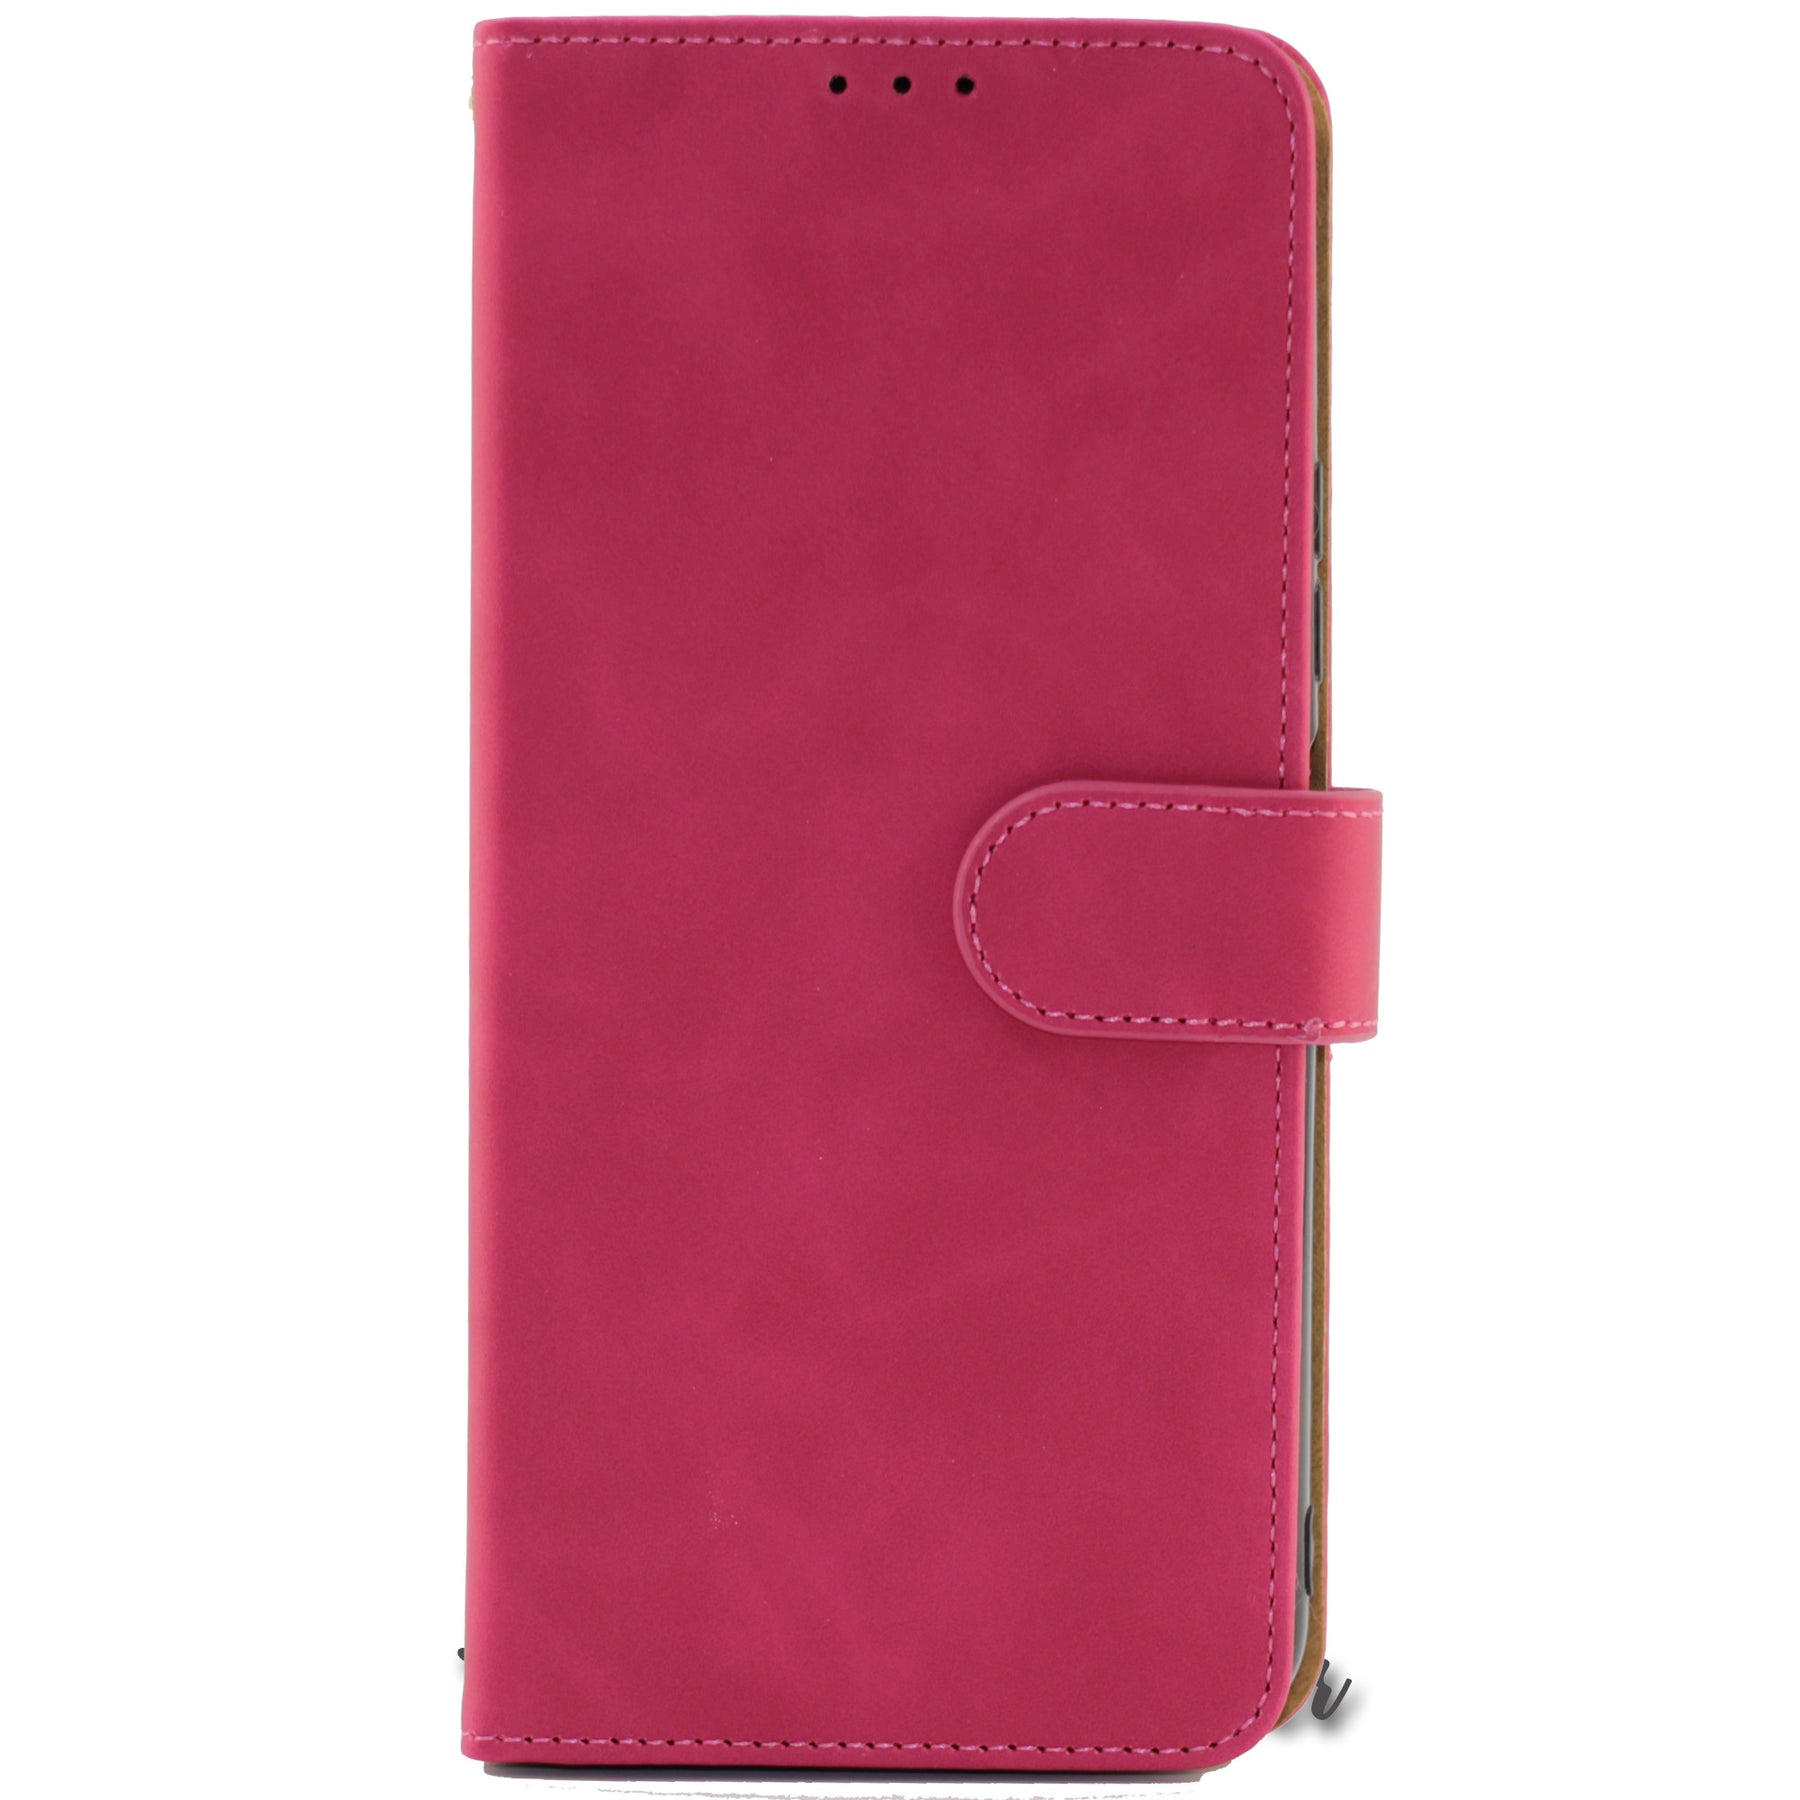 Nokia8.3 pink wallet case